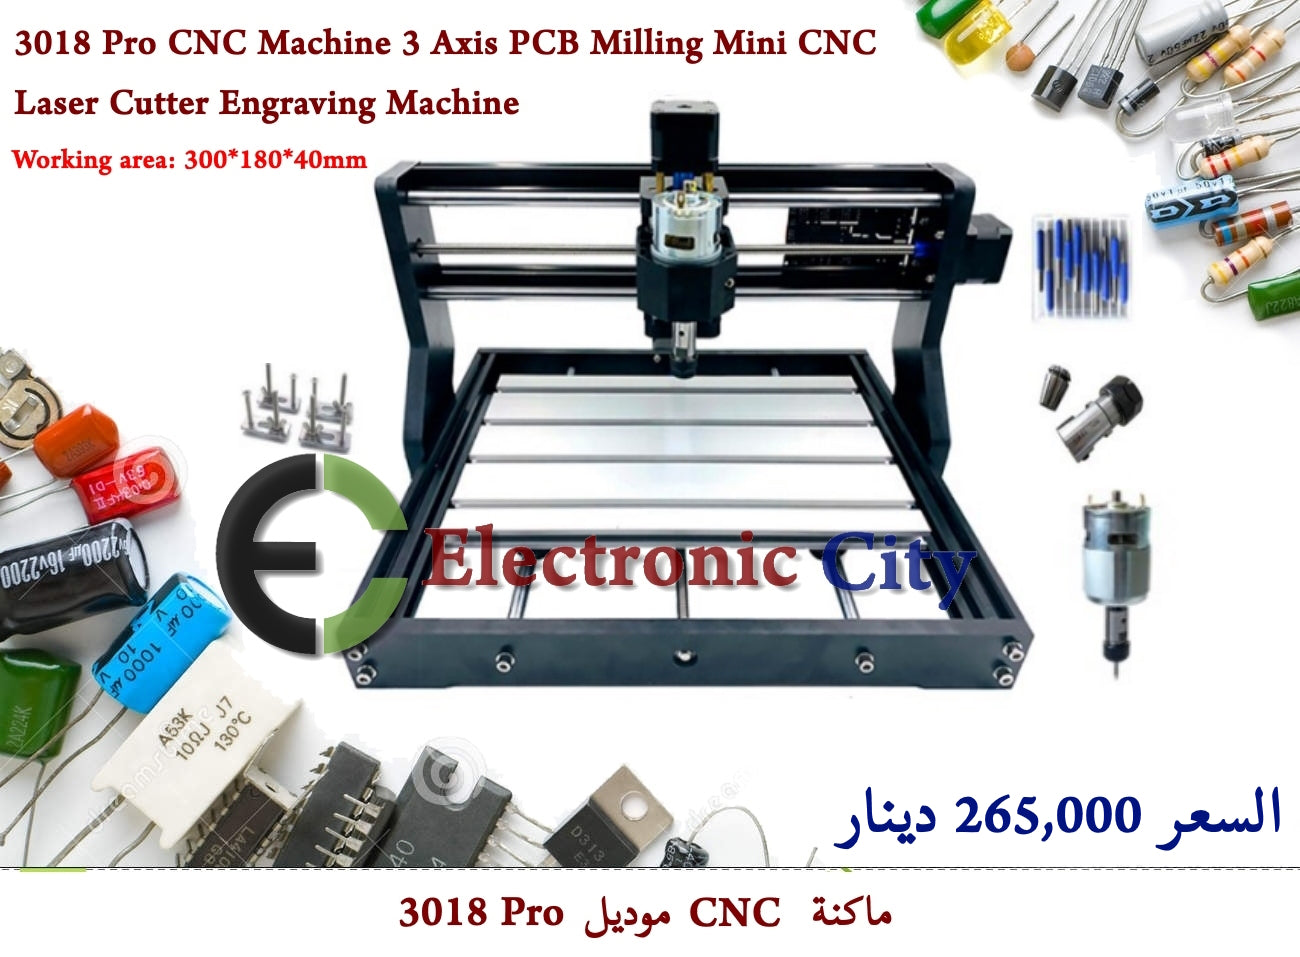 3018 Pro CNC Machine 3 Axis PCB Milling Mini CNC Laser Cutter Engraving Machine